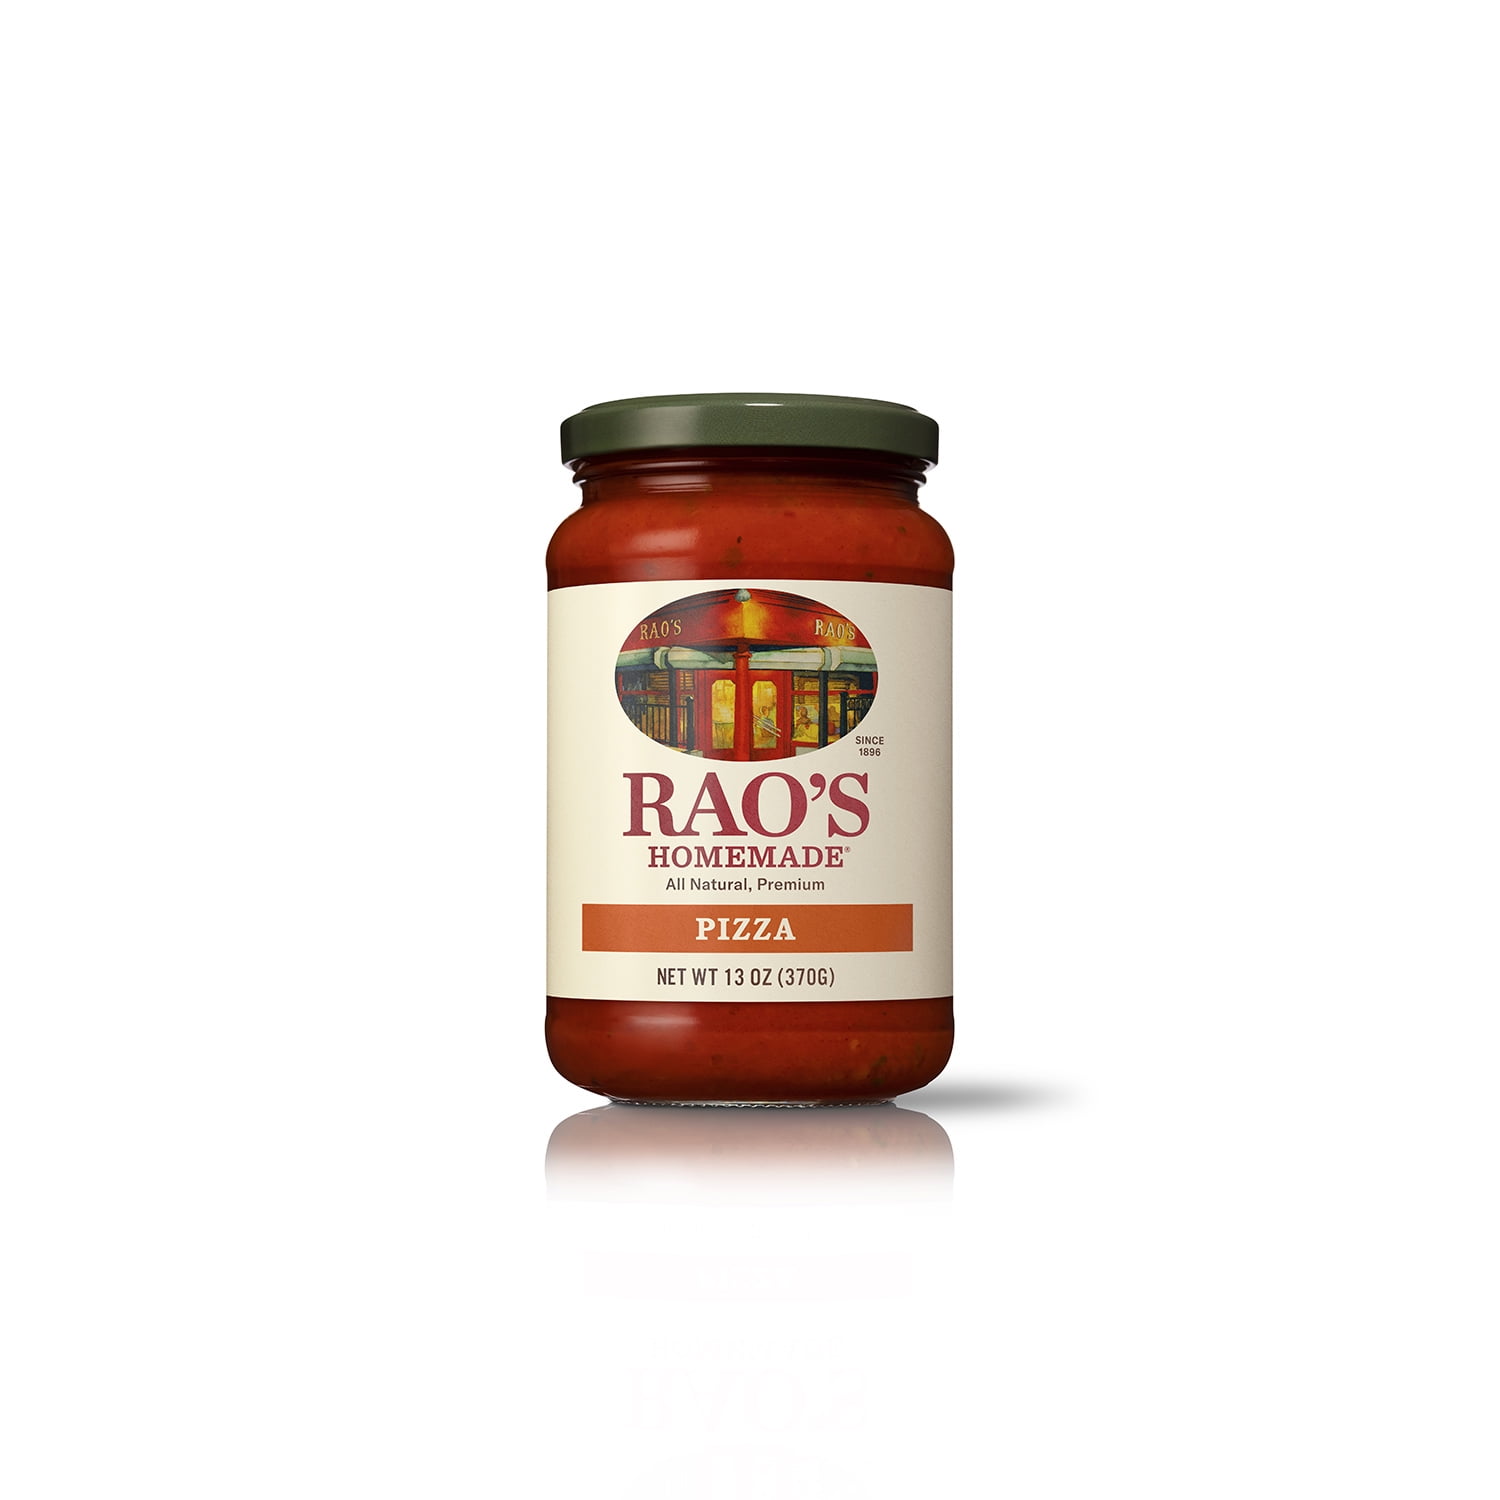 Raos Homemade All Natural Tomatoe Pizza Sauce, 13 oz pic